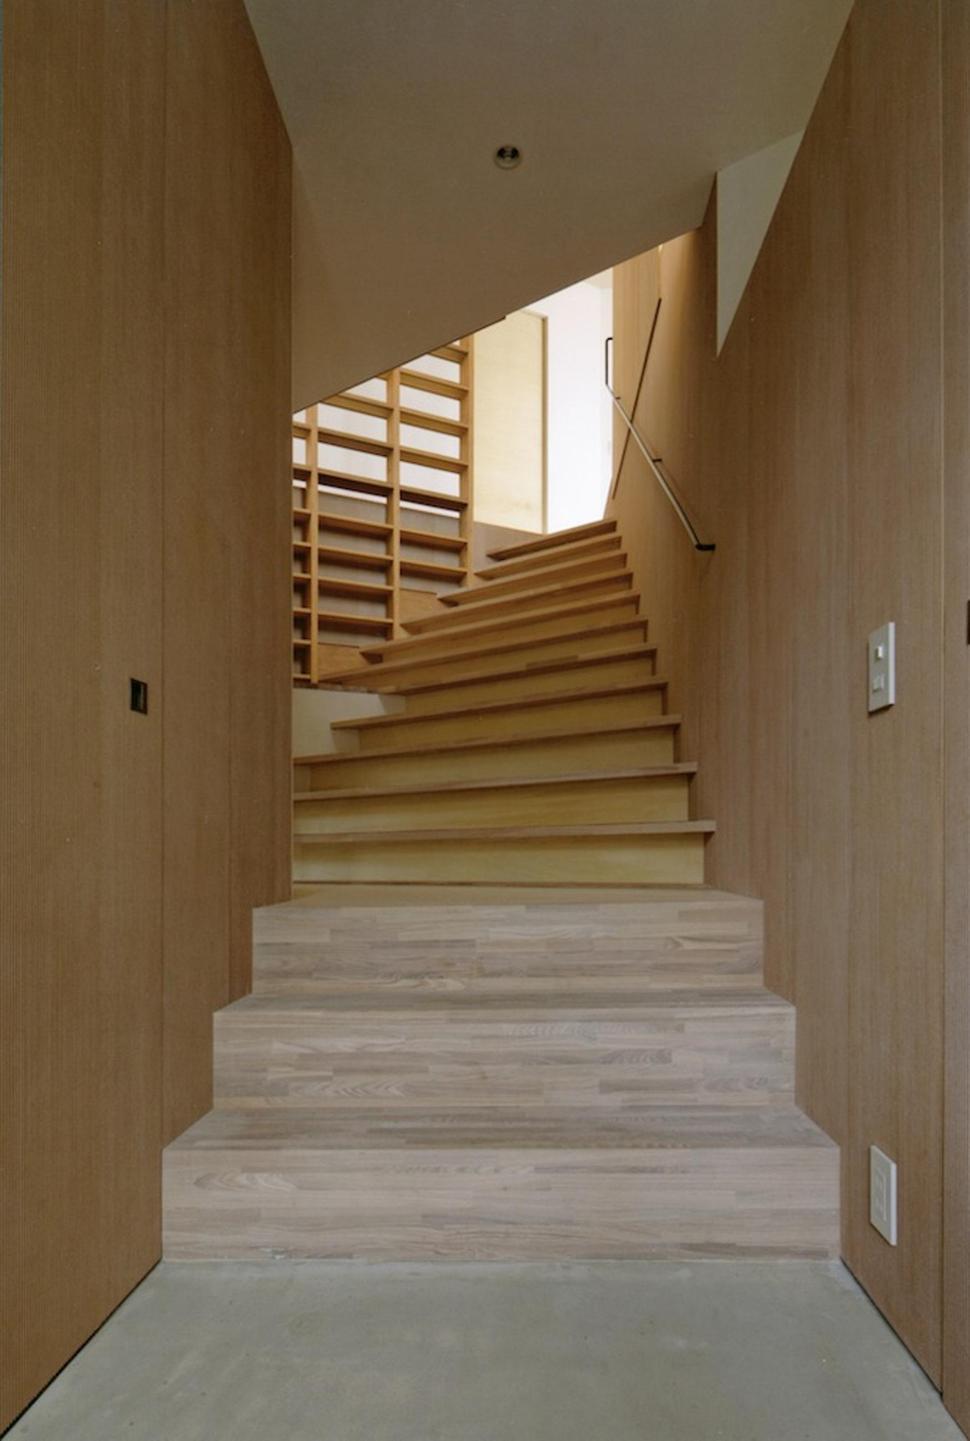 steep-slope-house-with-bookshelf-lined-interior-11-steps.jpg